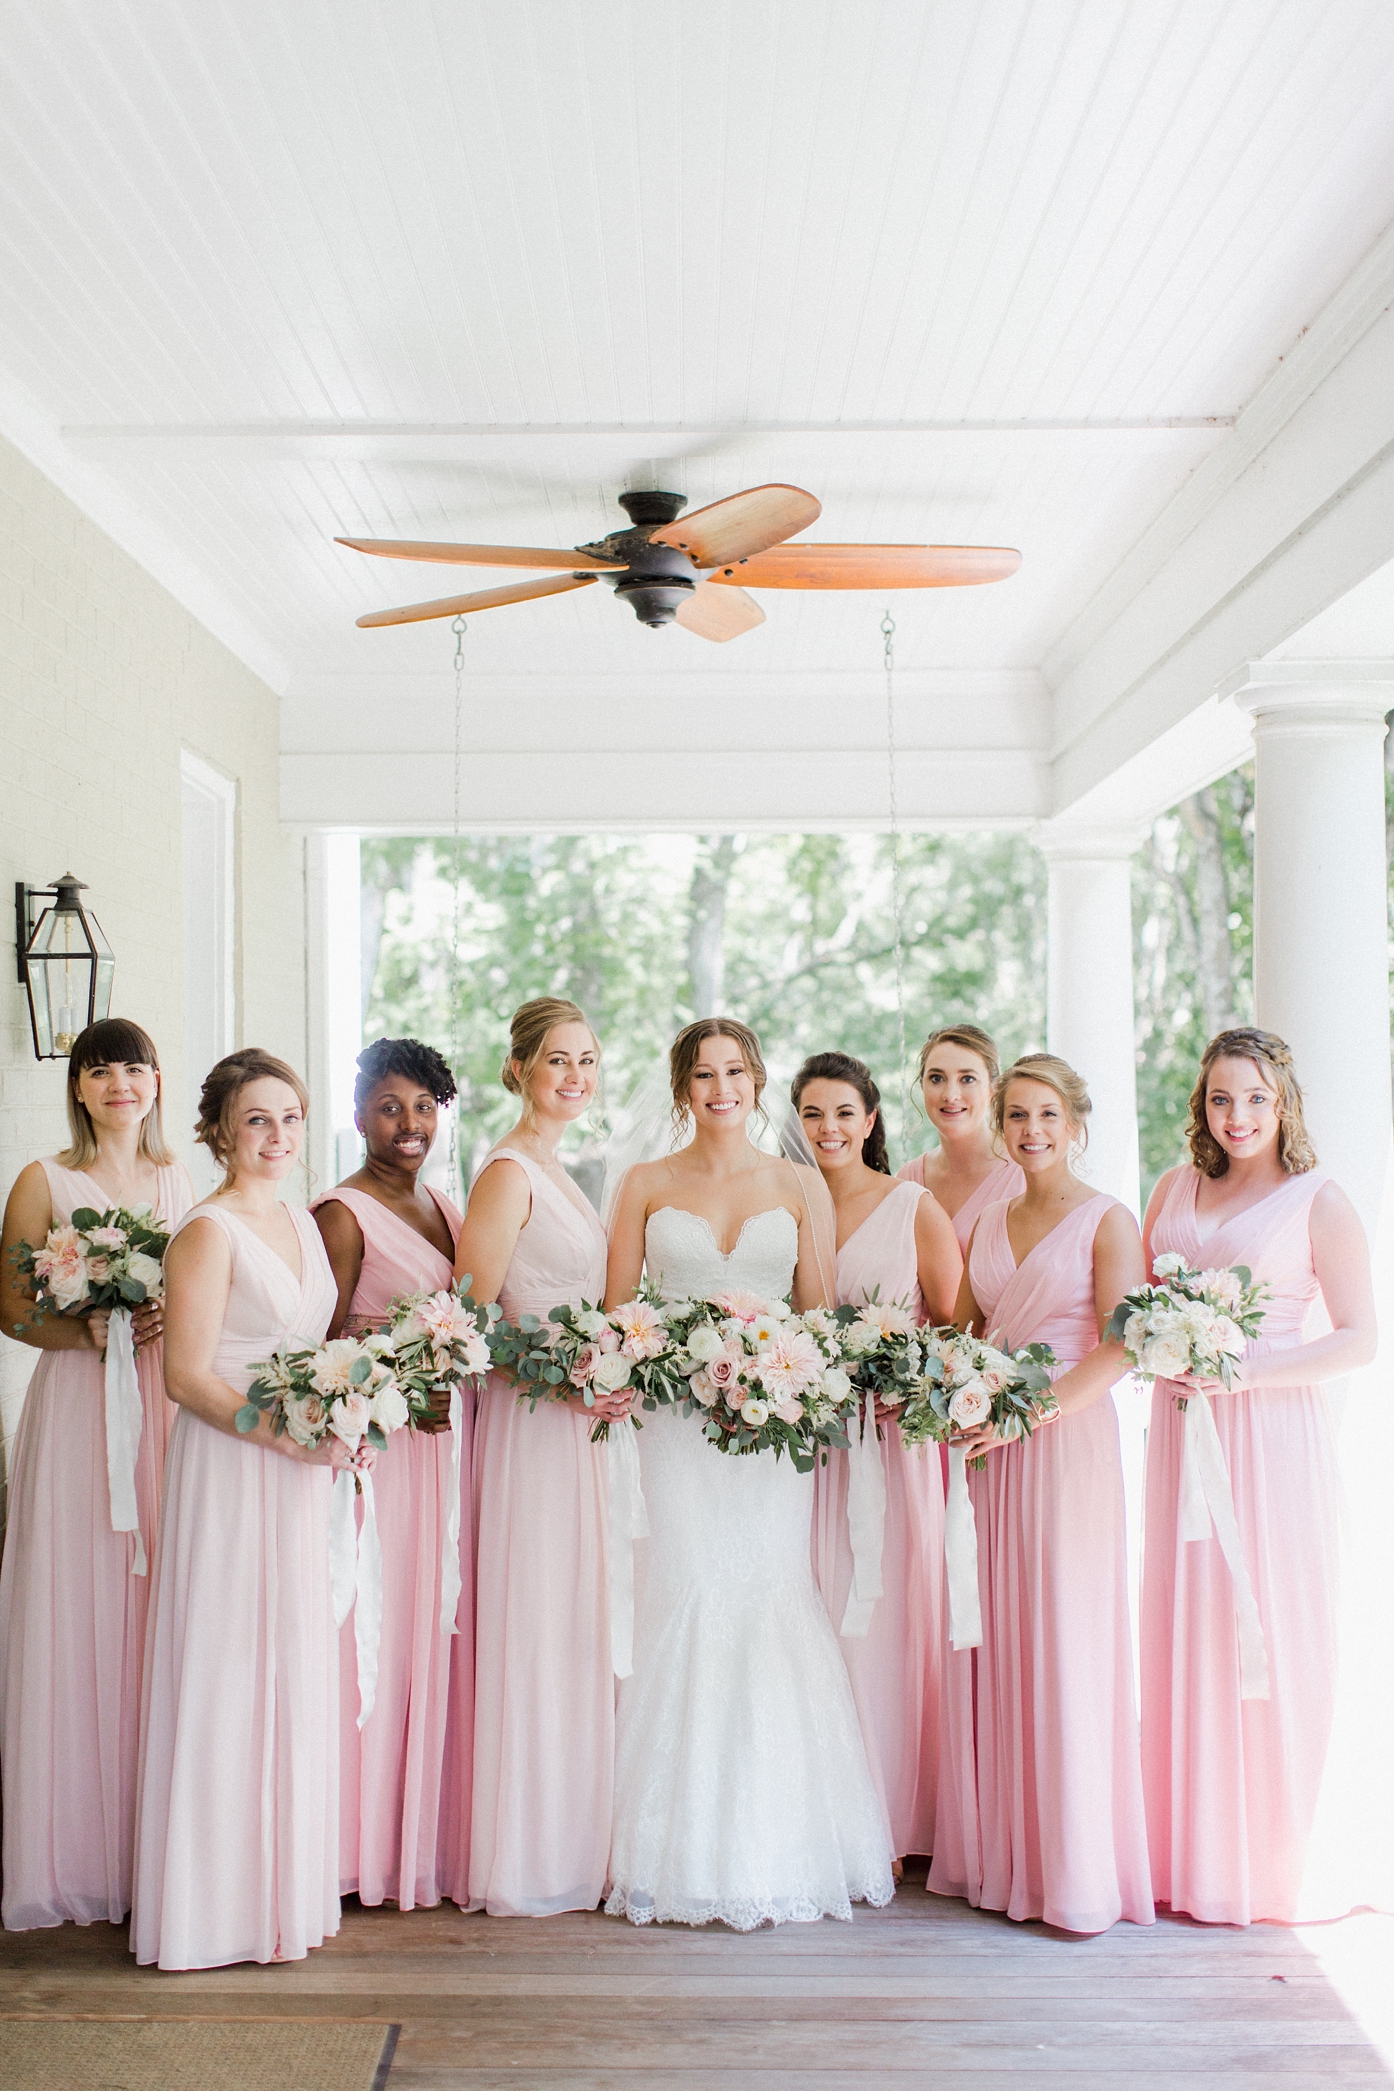 Blush bridesmaid dresses at Big Spring Farm Wedding by Alisandra Photography